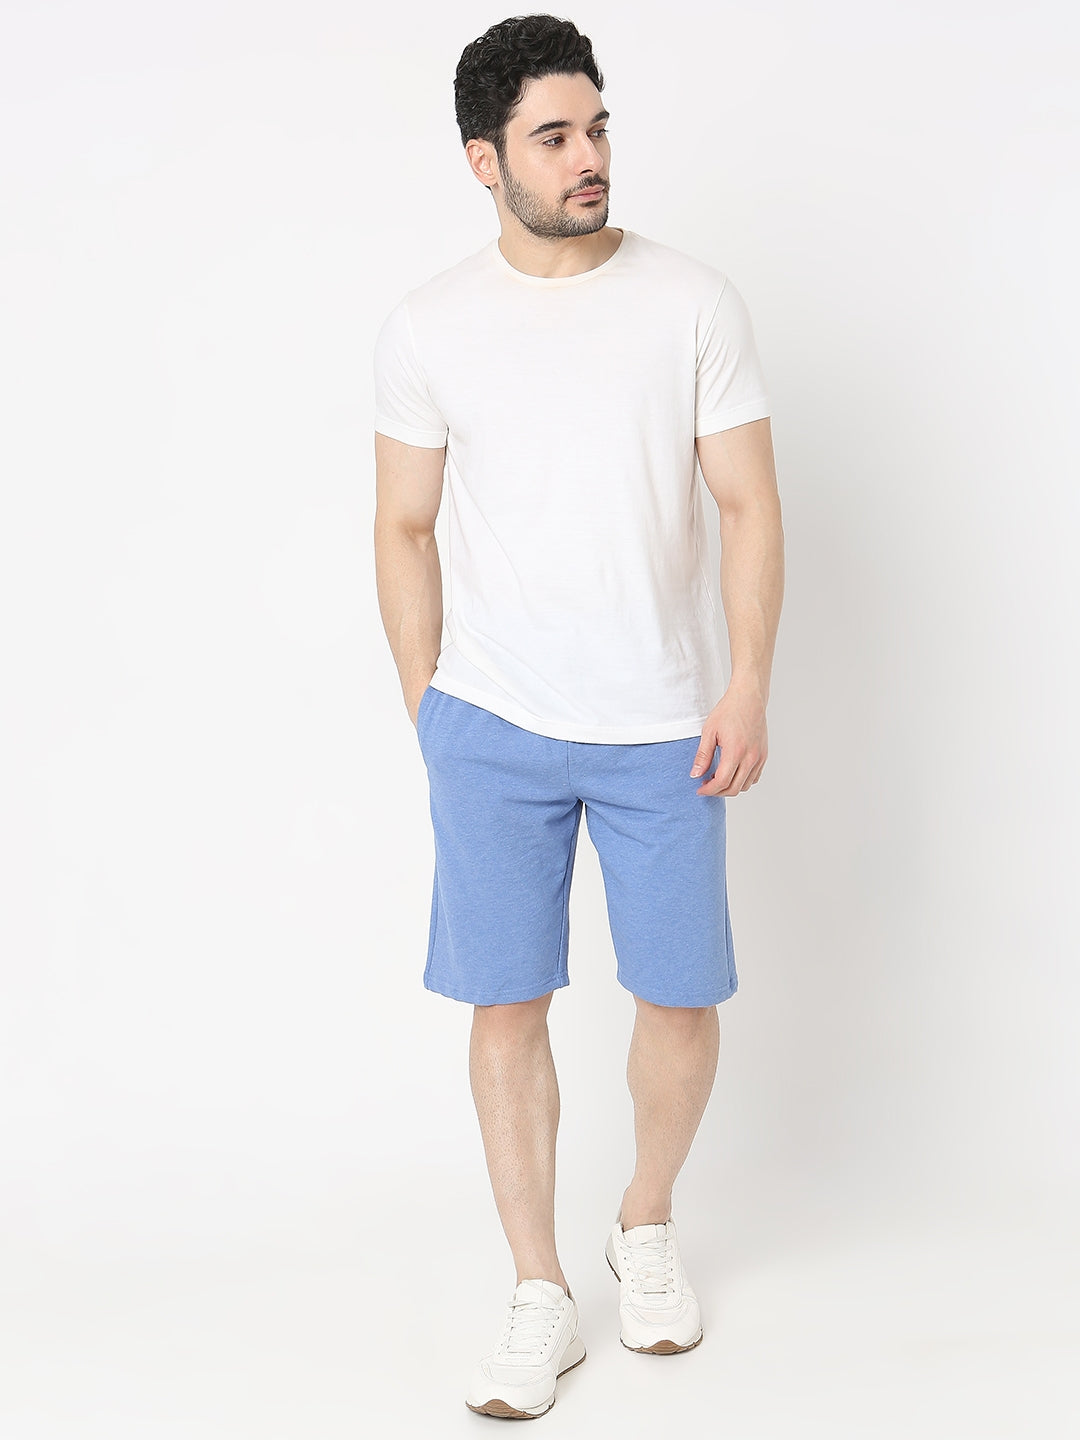 Underjeans by Spykar Men Premium Knitted Blue Melange Shorts